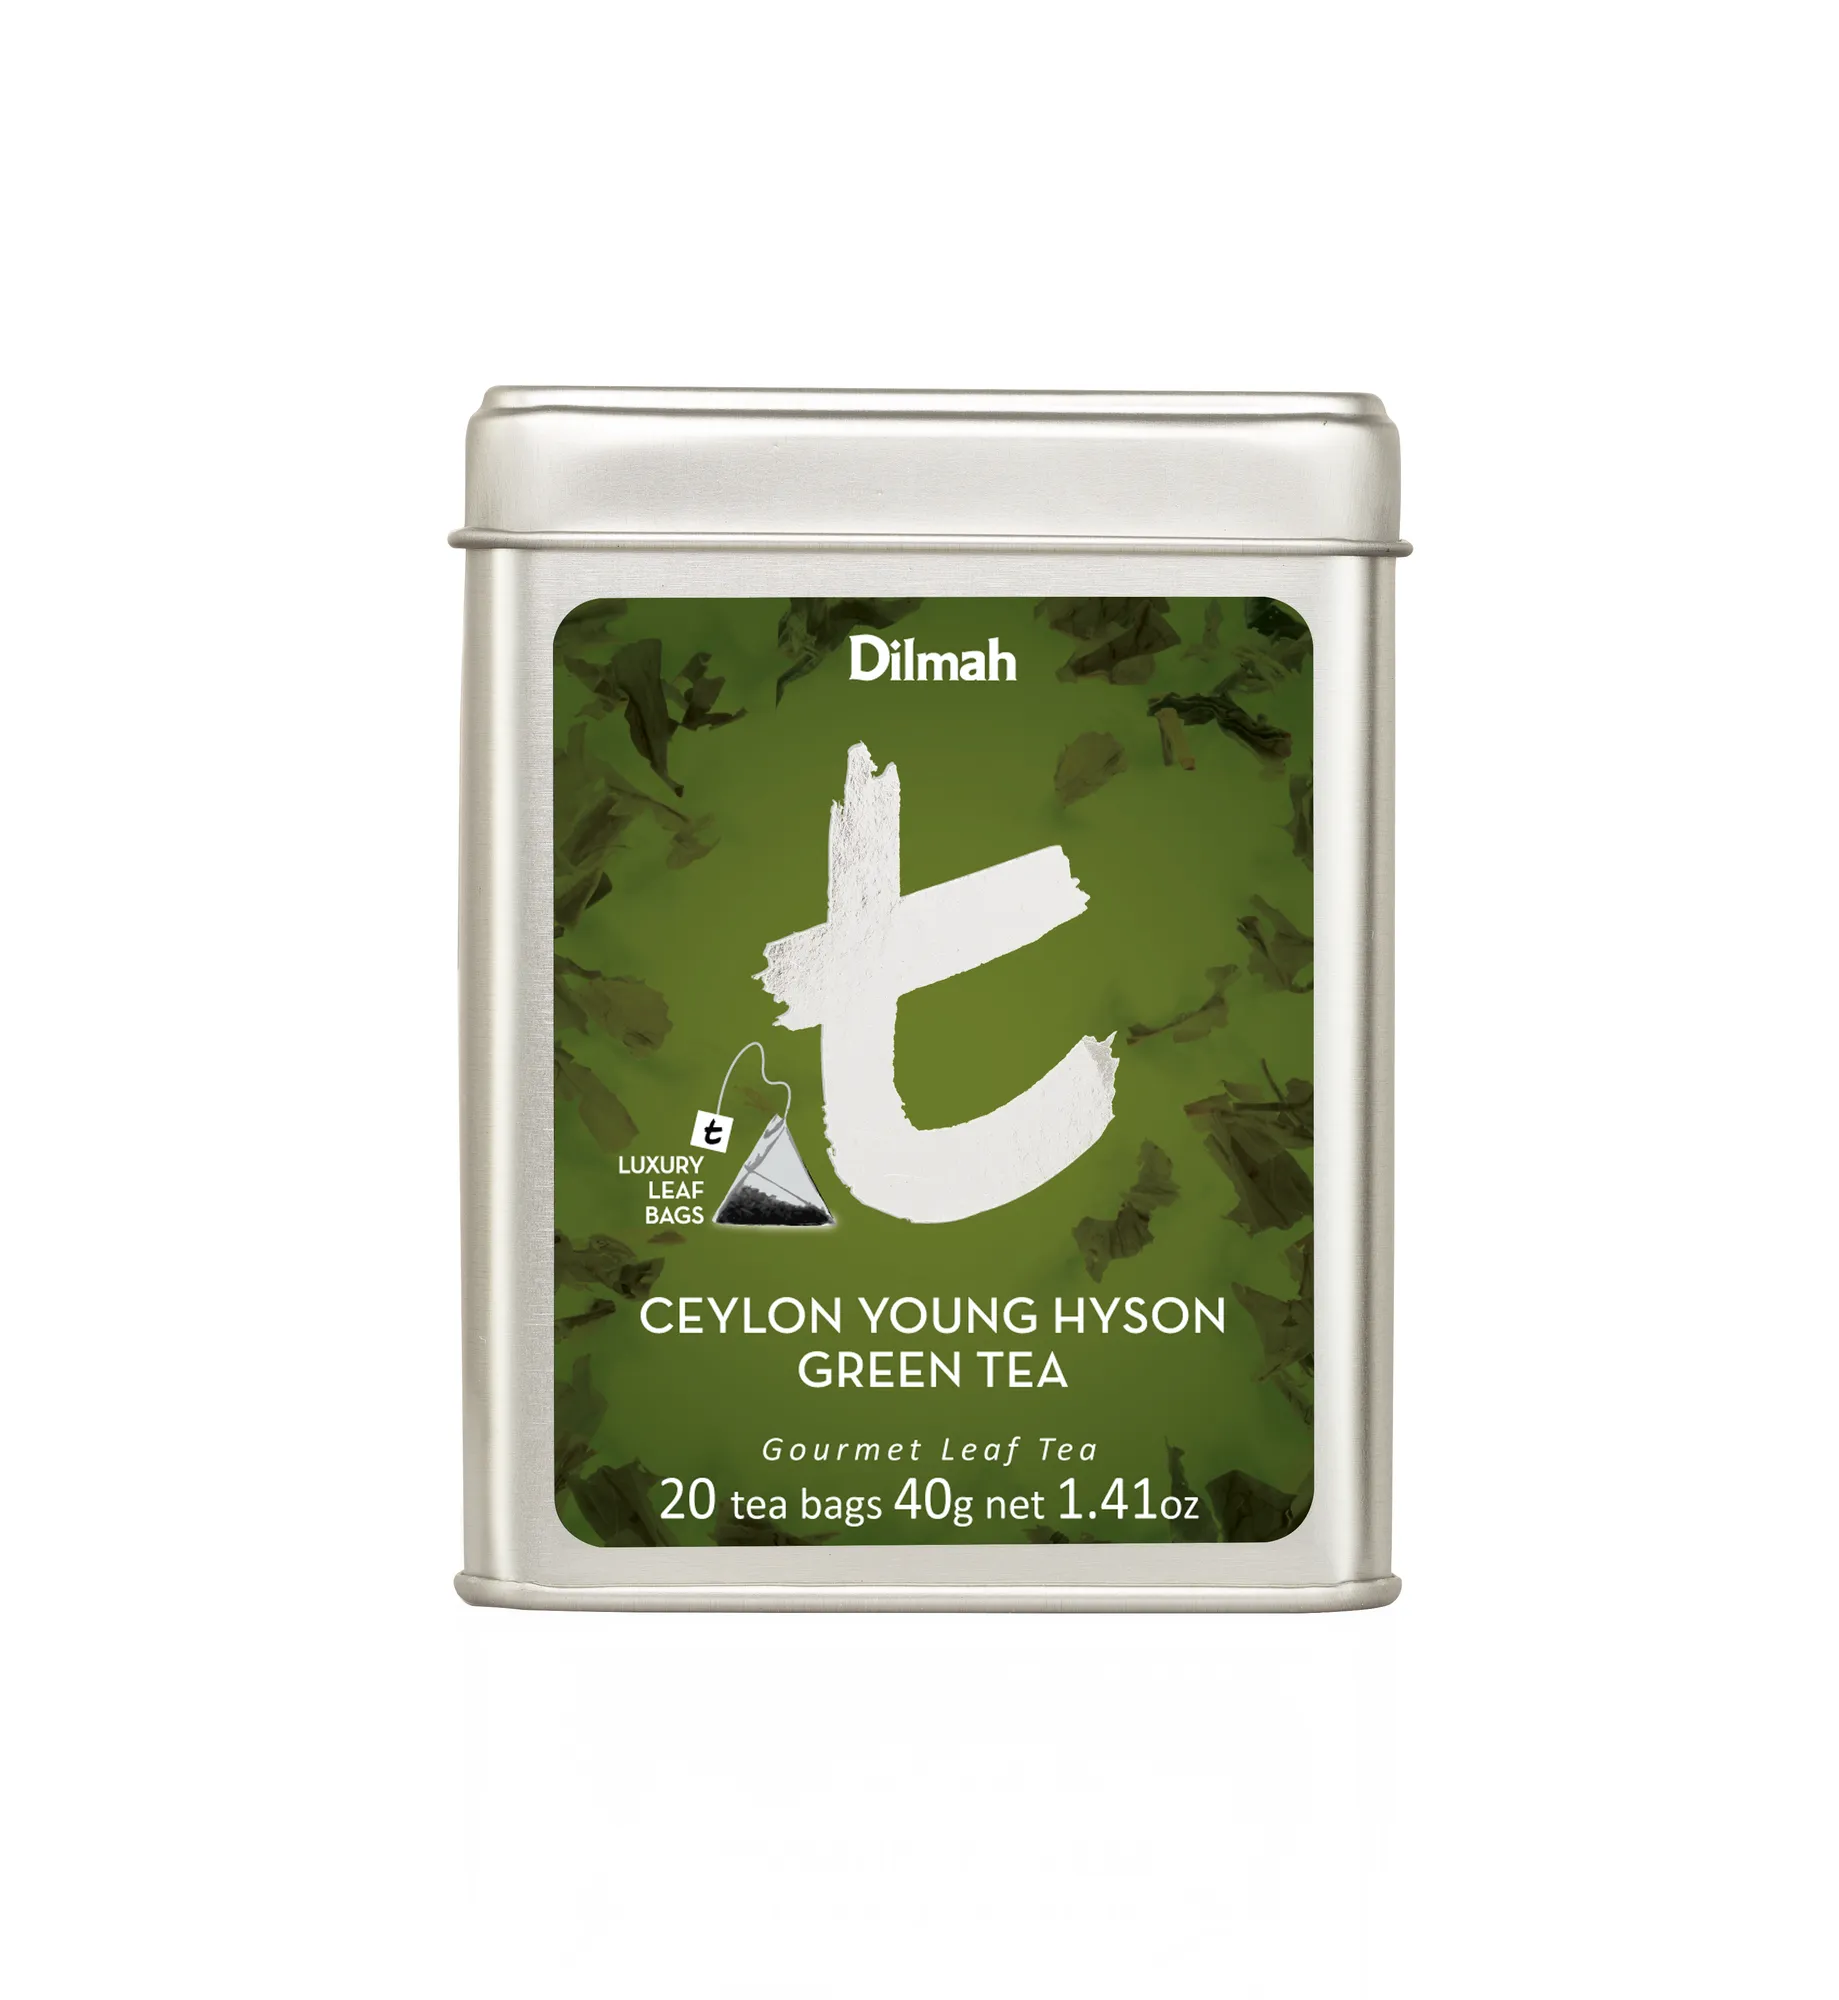 20 luxury tea bags of Ceylon Young Hyson Green Tea in tin